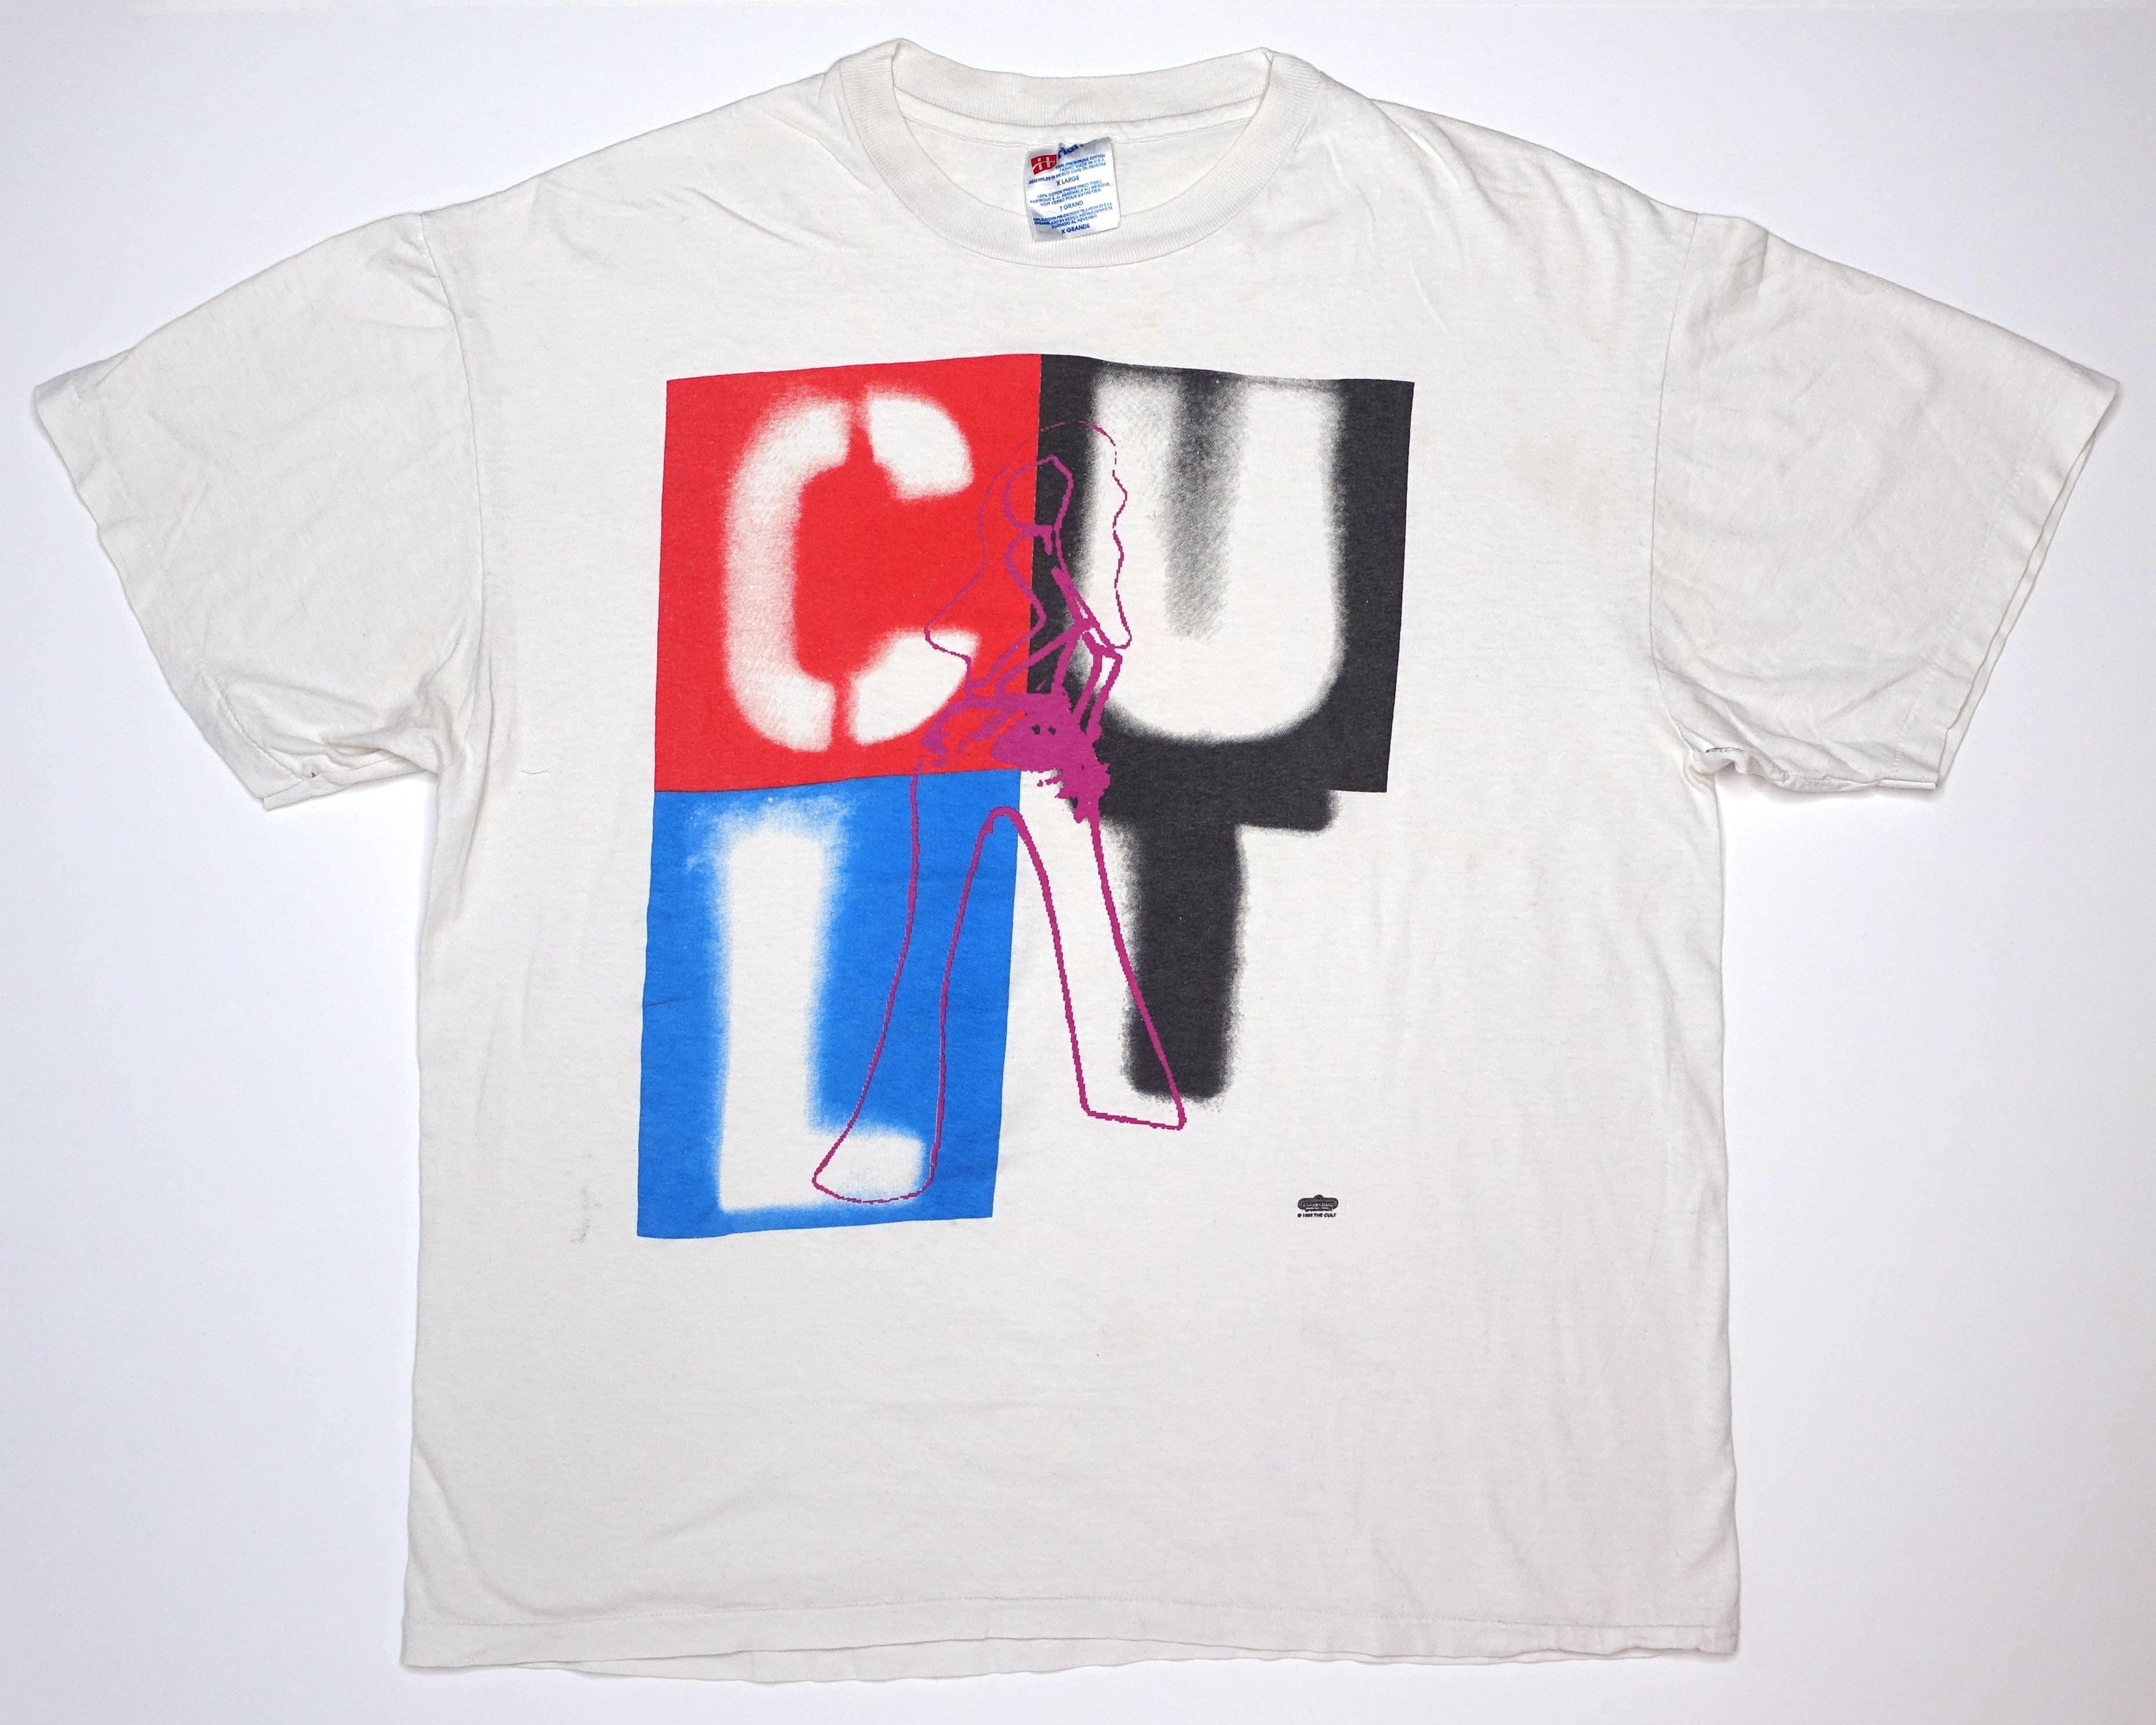 the Cult - Gone / The Cult 1995 Tour Shirt Size XL